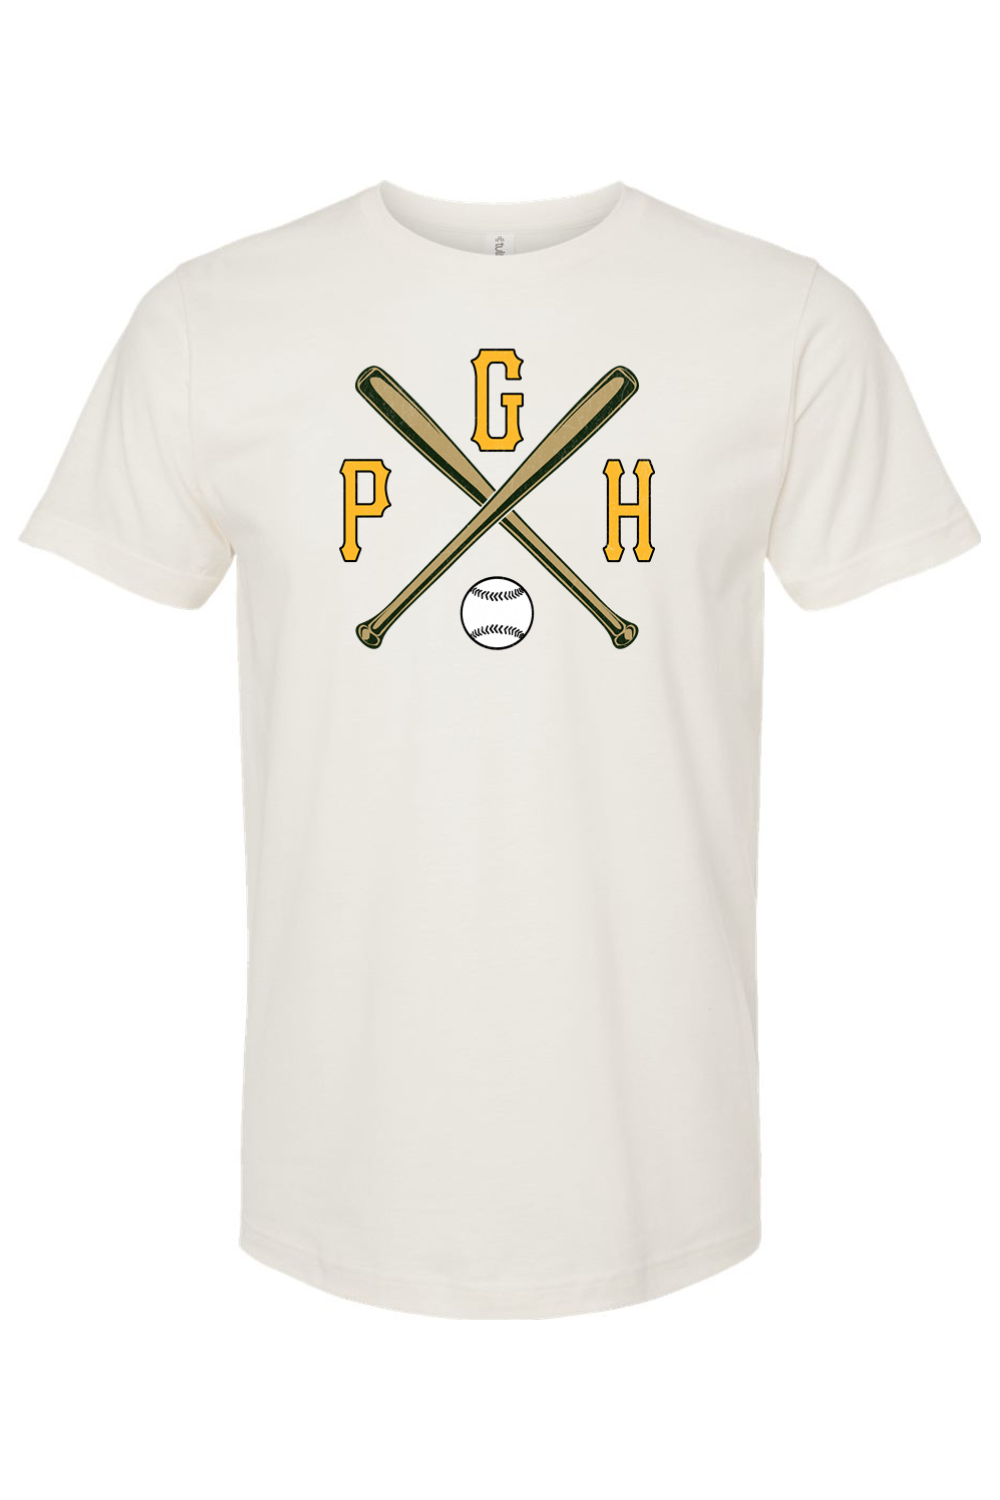 PGH Cross - Baseball - Yinzylvania